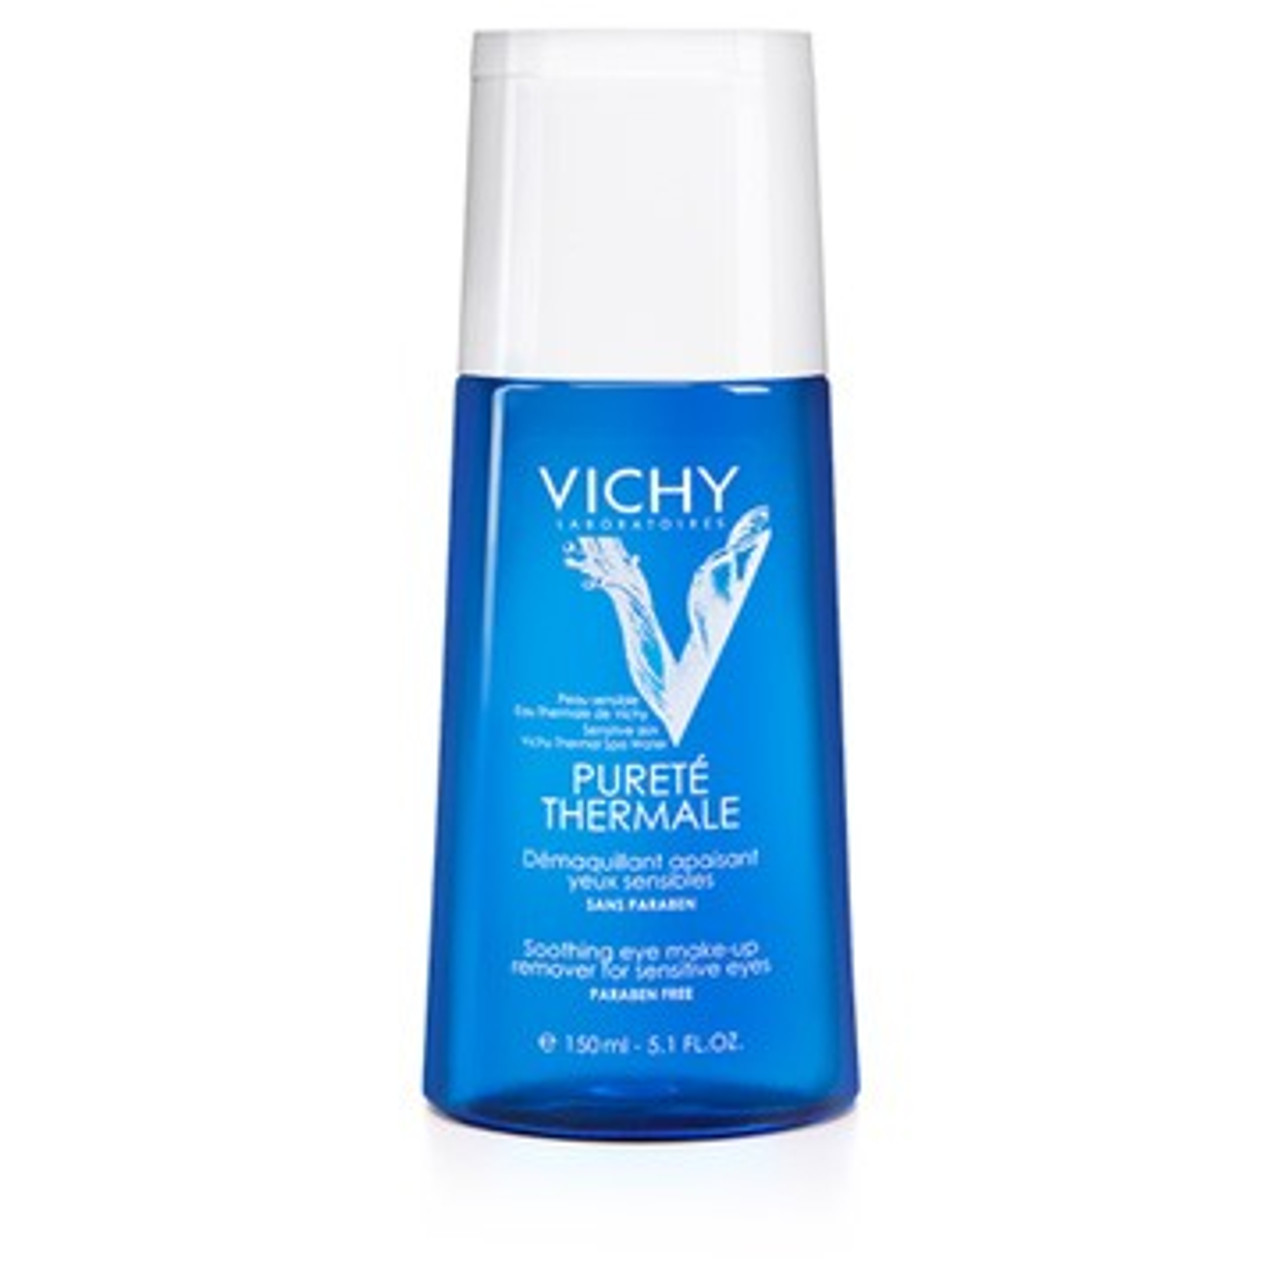 Vichy Purete Thermale Eye Make-Up Remover - 5.1 oz (M50660)